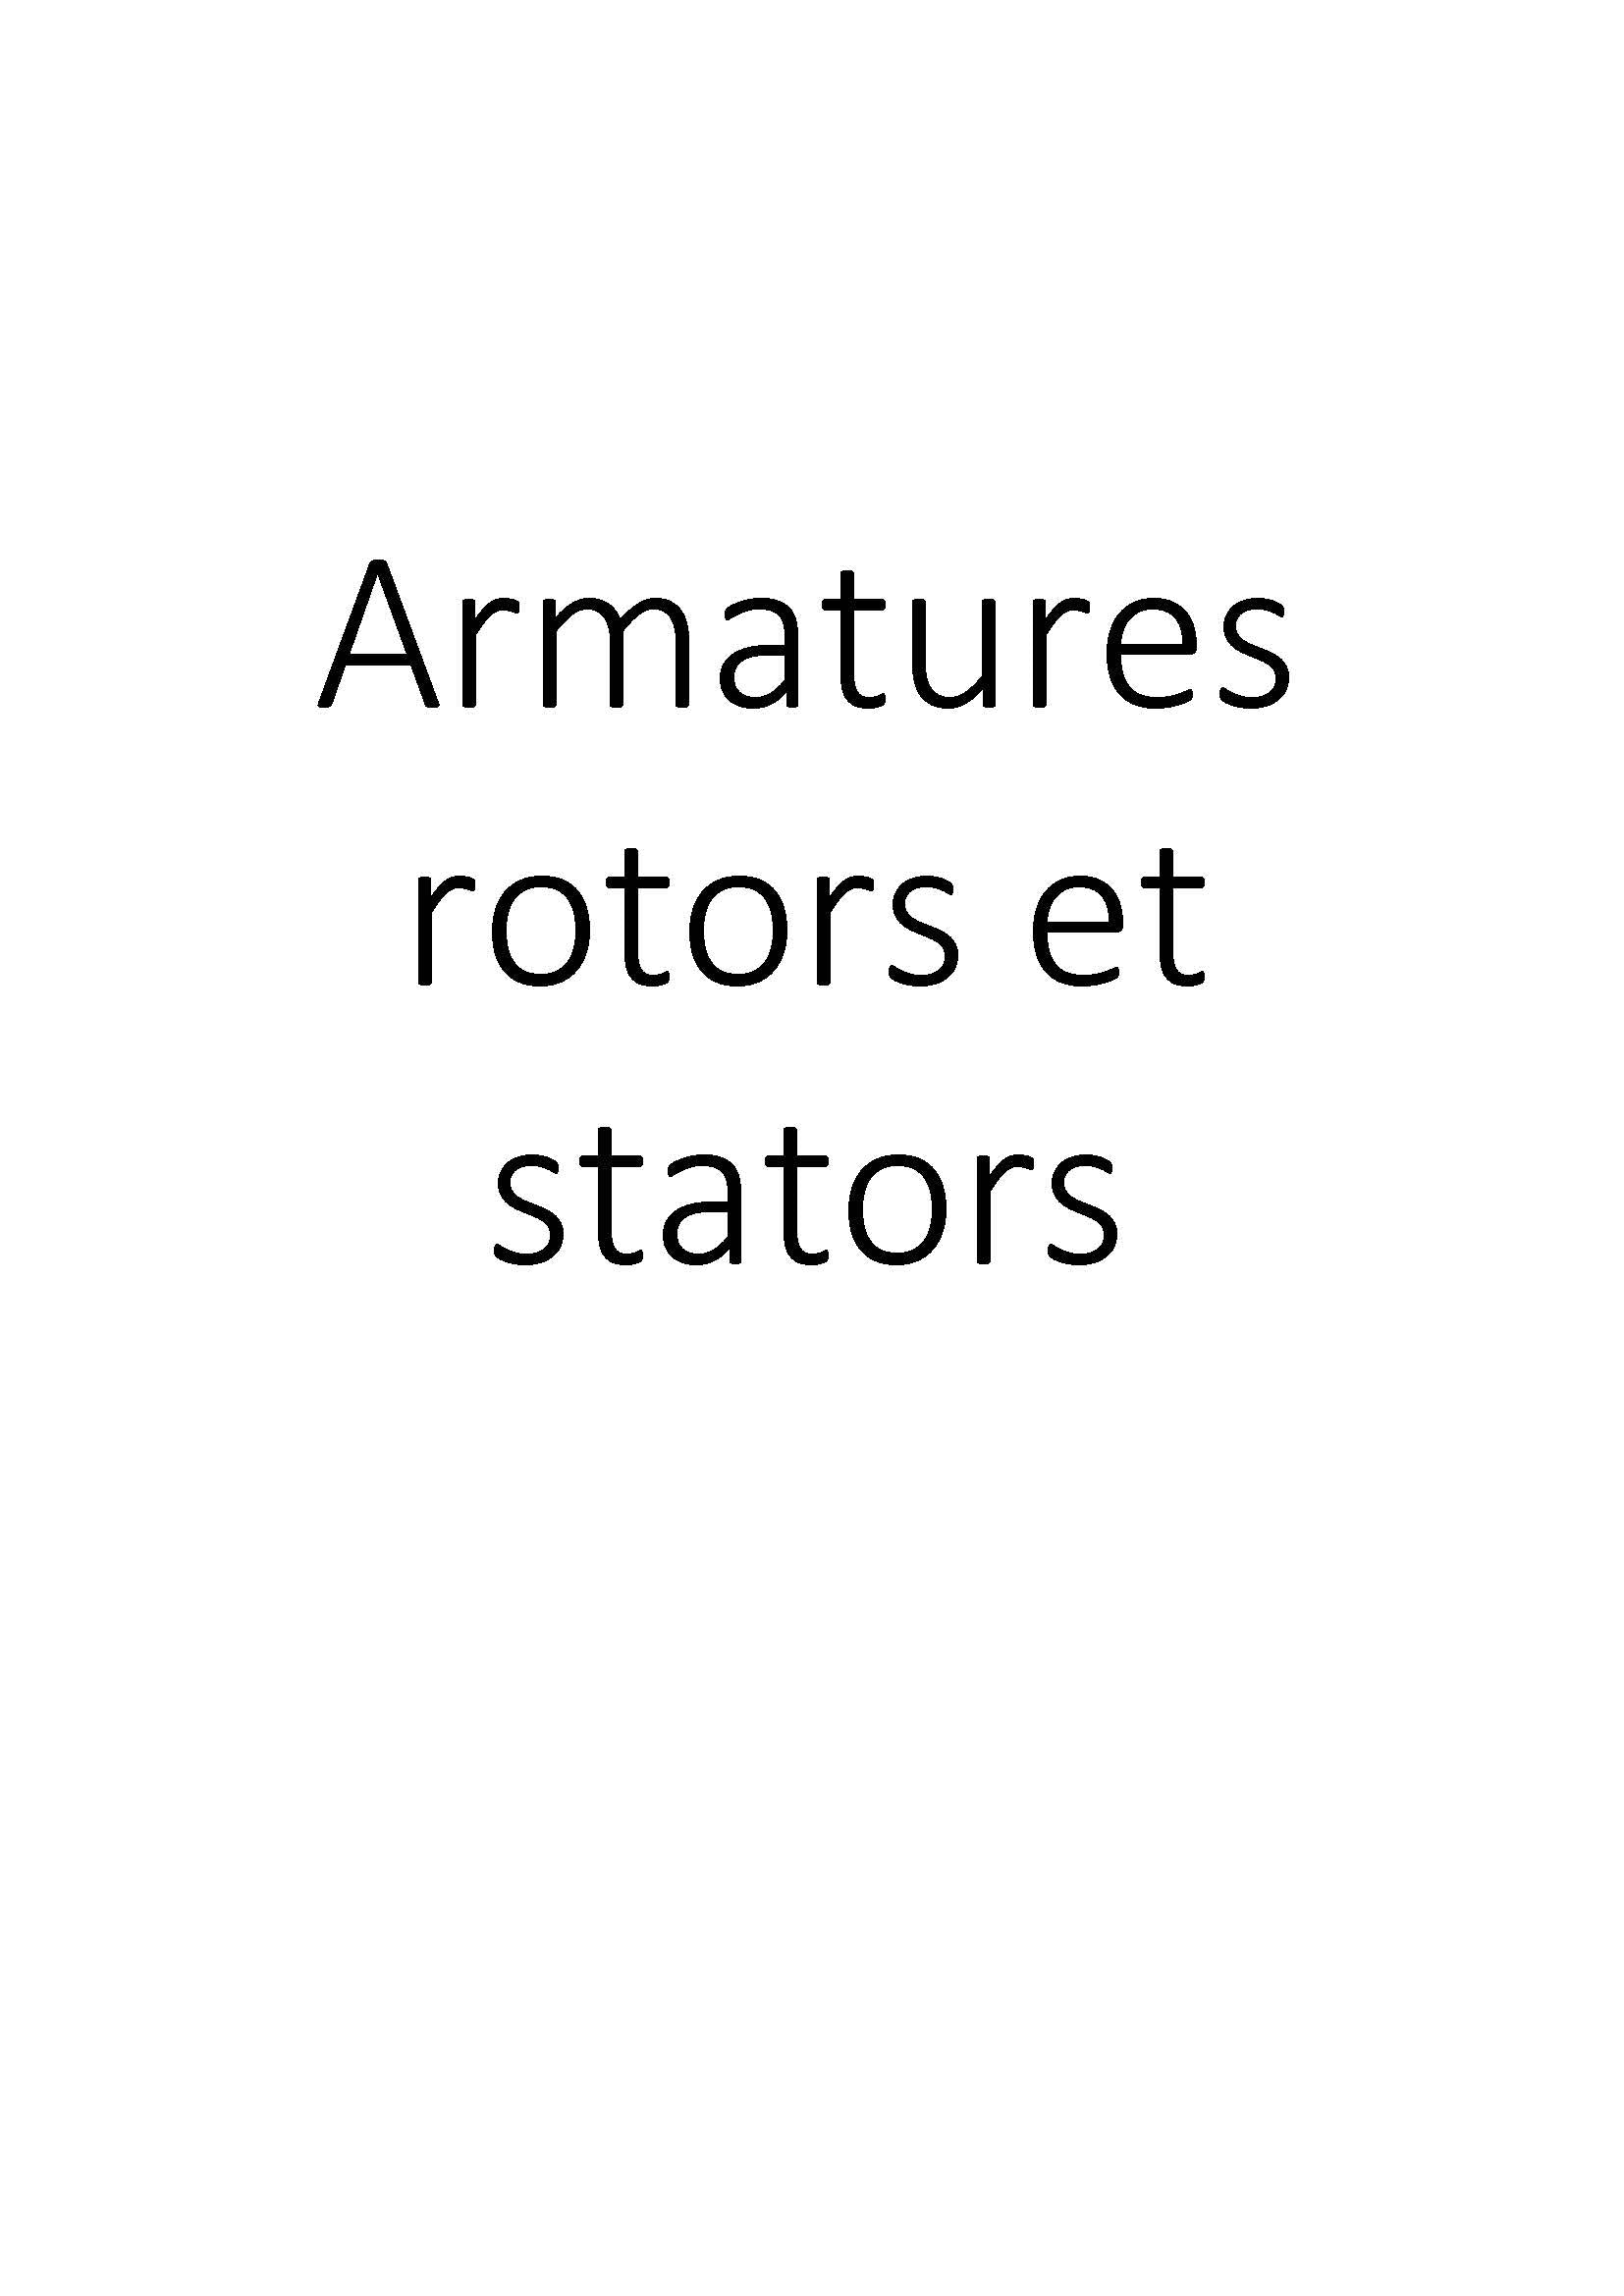 Armatures rotors et stators clicktofournisseur.com